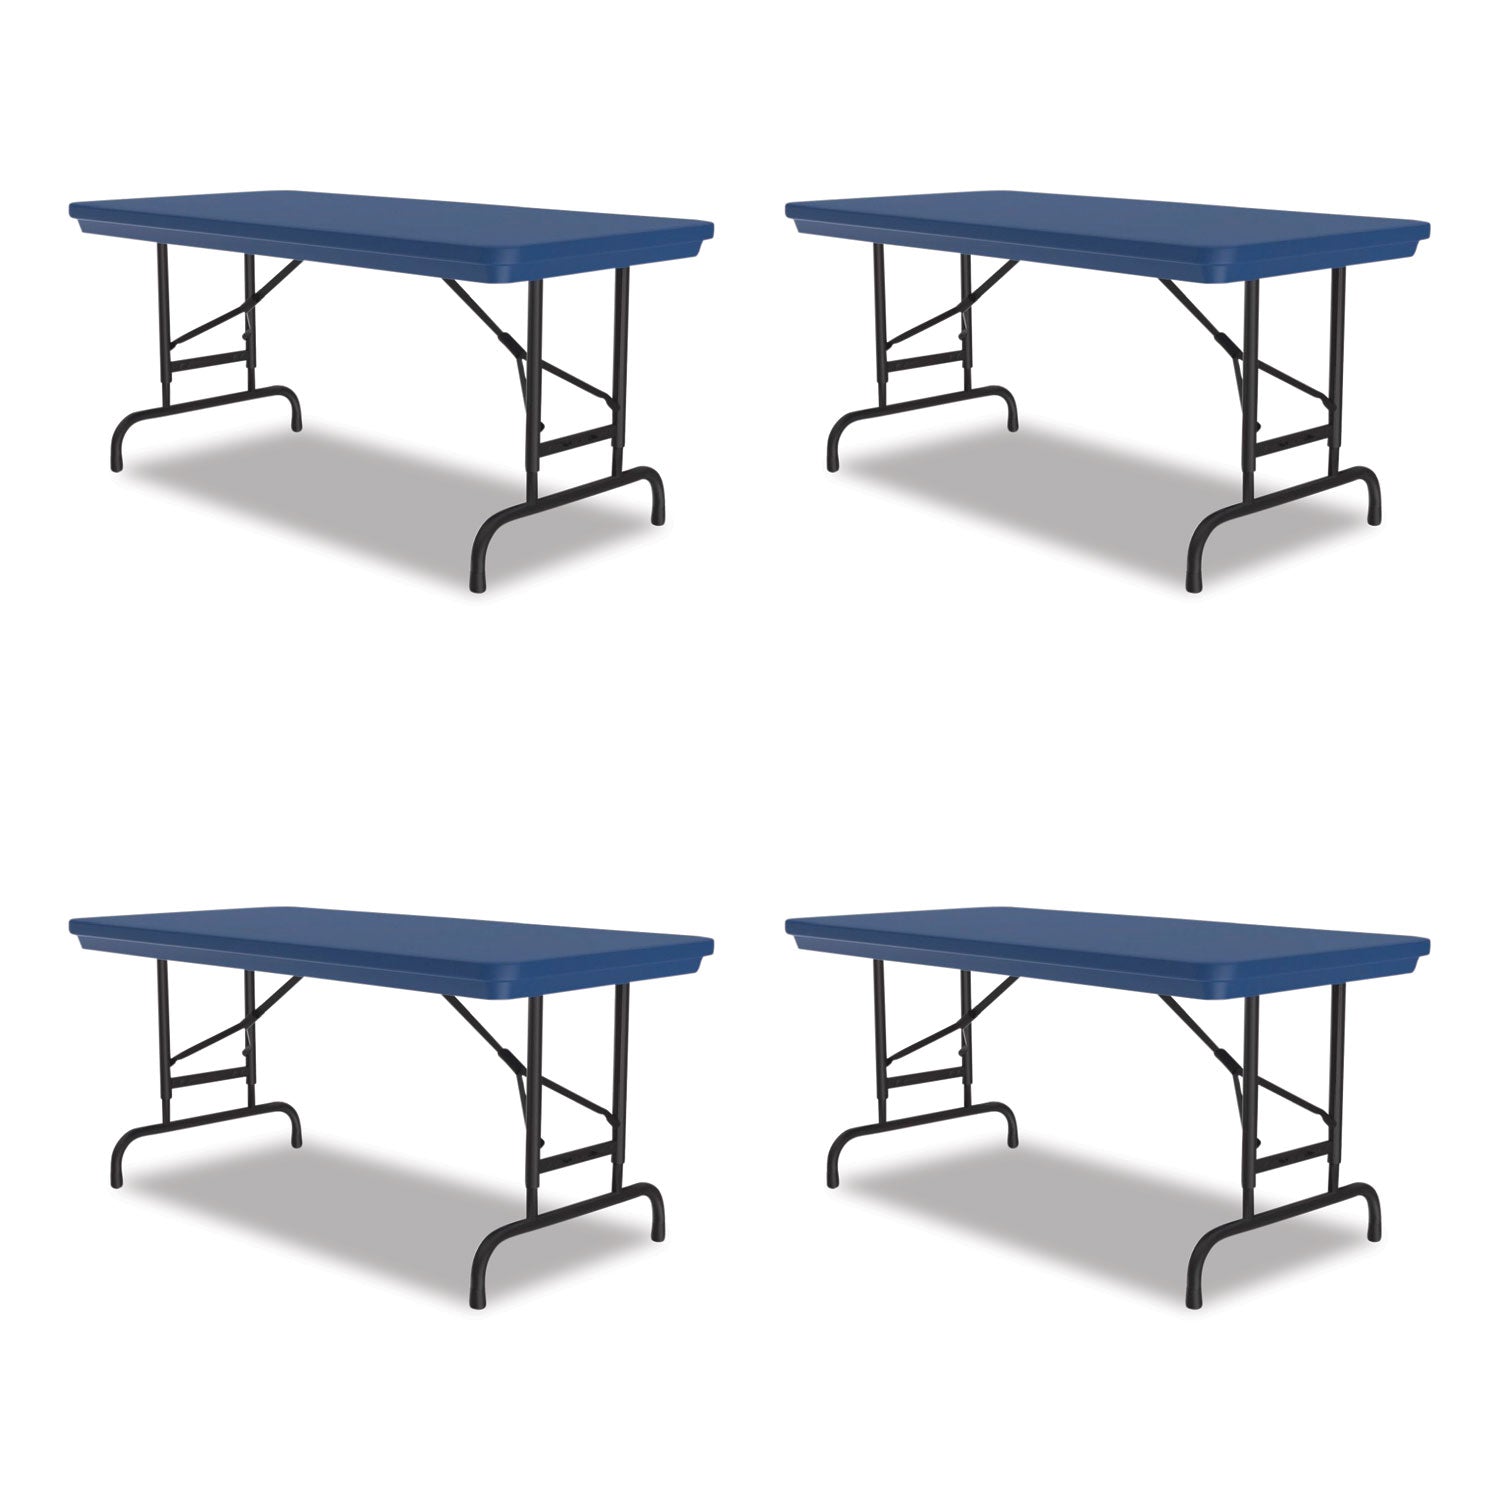 adjustable-folding-table-rectangular-48-x-24-x-22-to-32-blue-top-black-legs-4-pallet-ships-in-4-6-business-days_crlra2448274p - 1